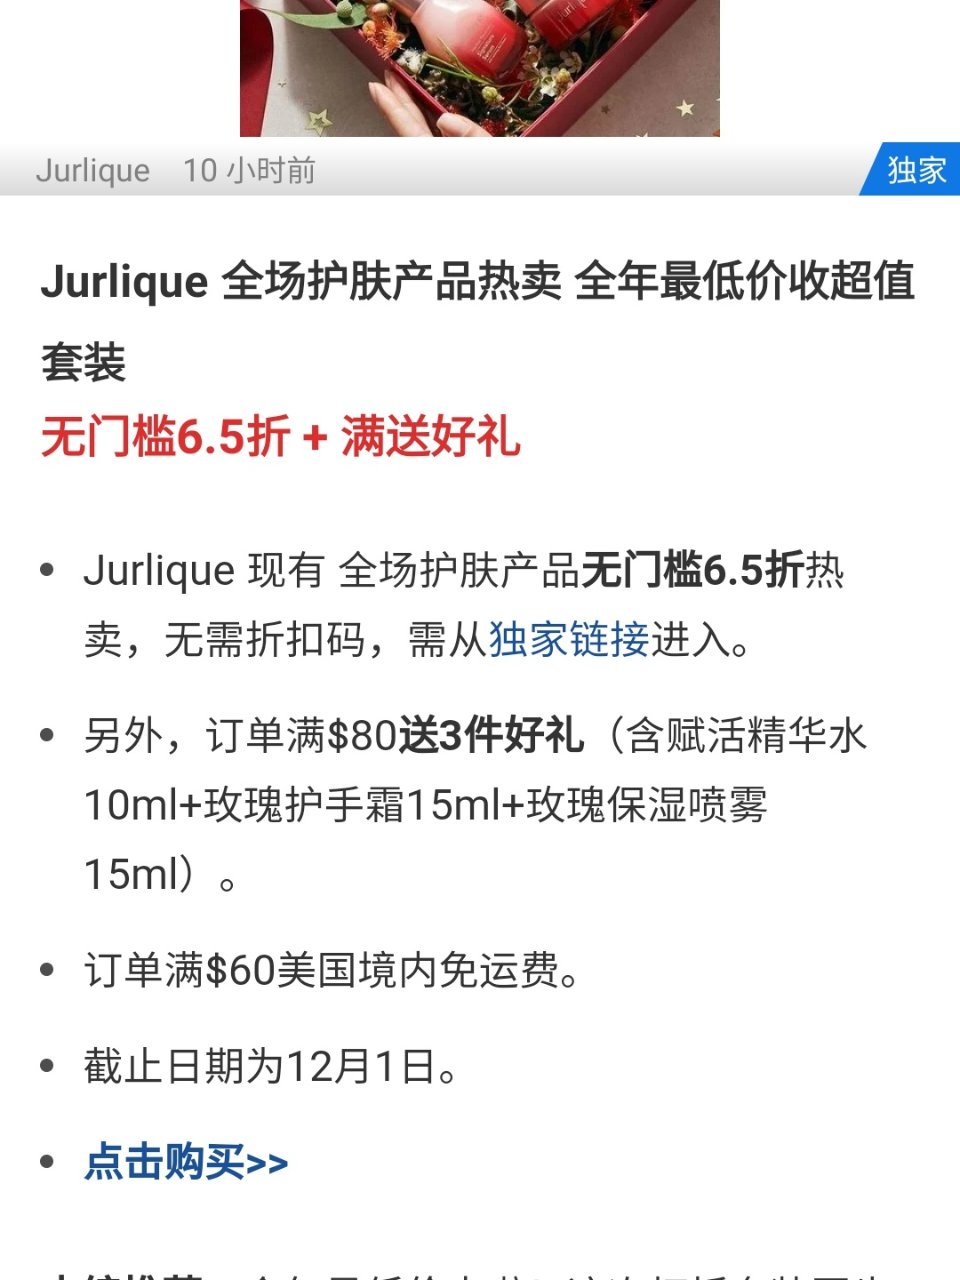 Jurlique全场护肤产品无门槛6.5...